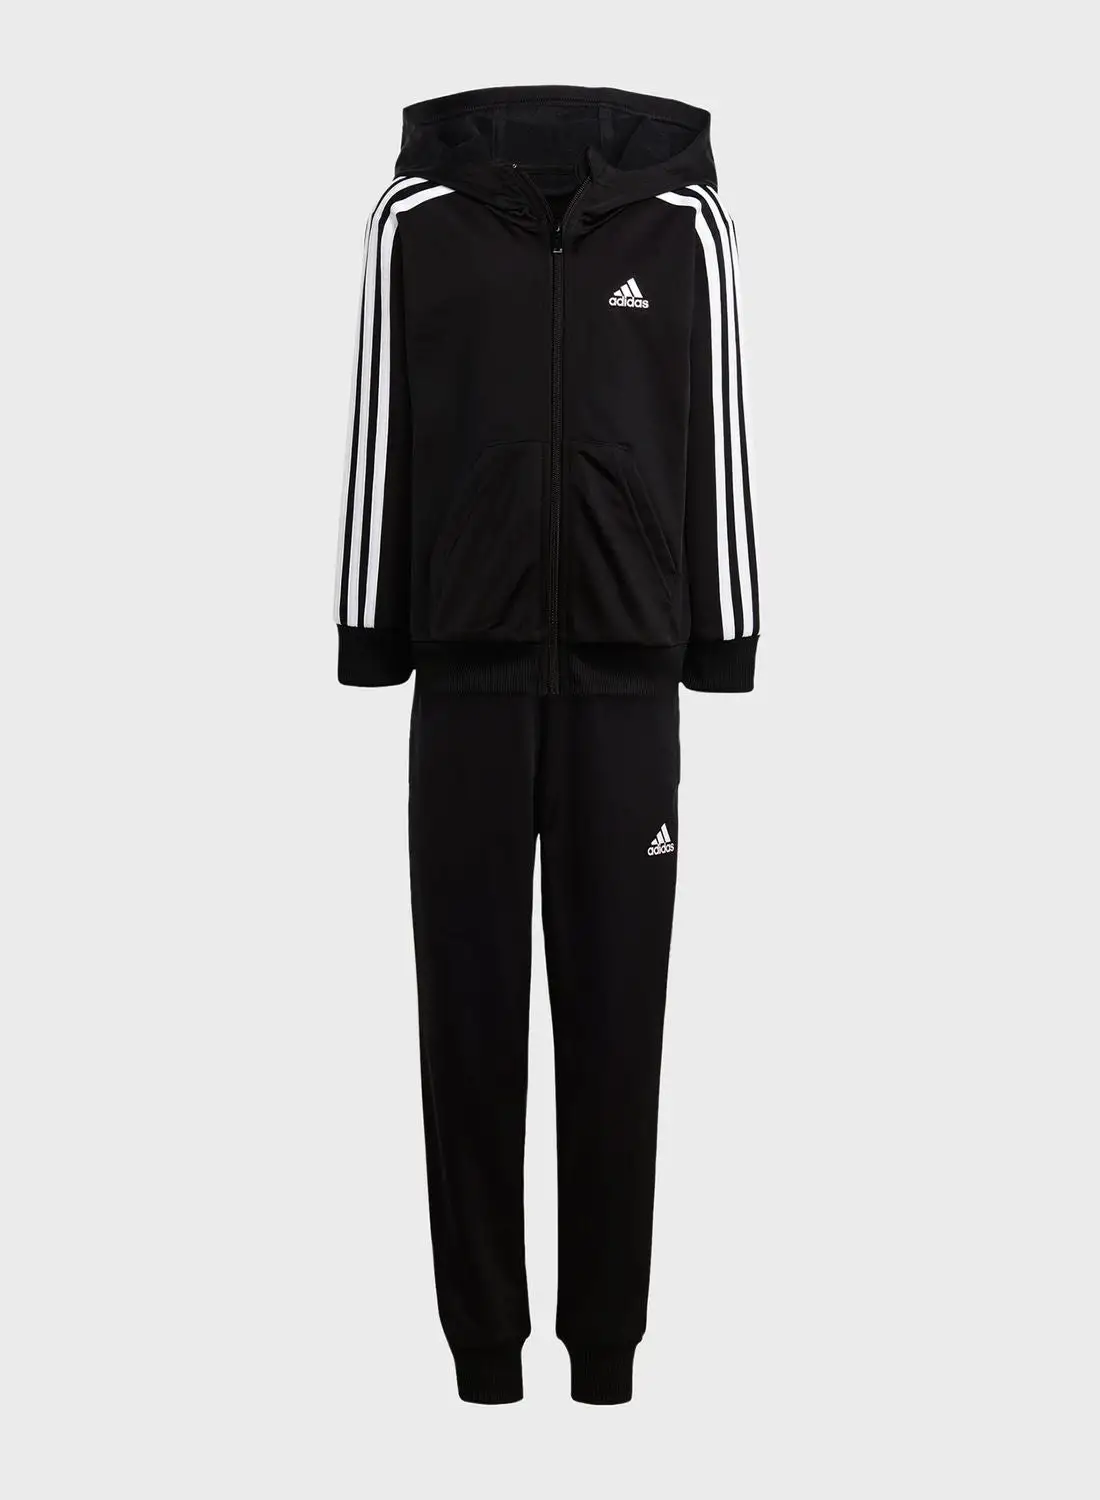 Adidas Little Kids 3-Stripes jacket and sweatpants